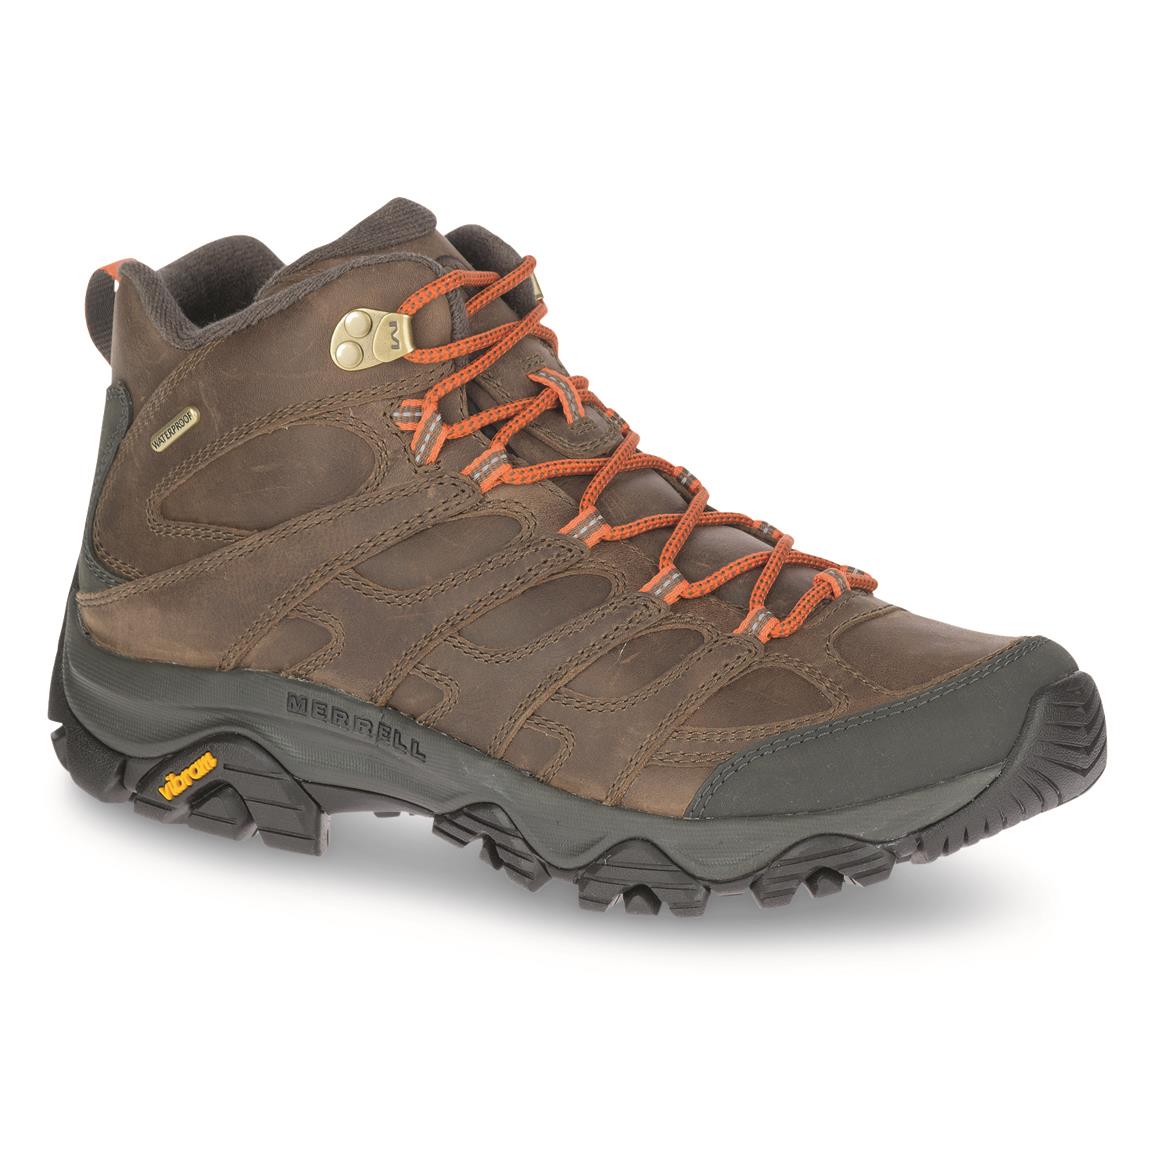 Merrell Men's Moab 3 Prime Waterproof Hiking Boots, Canteen